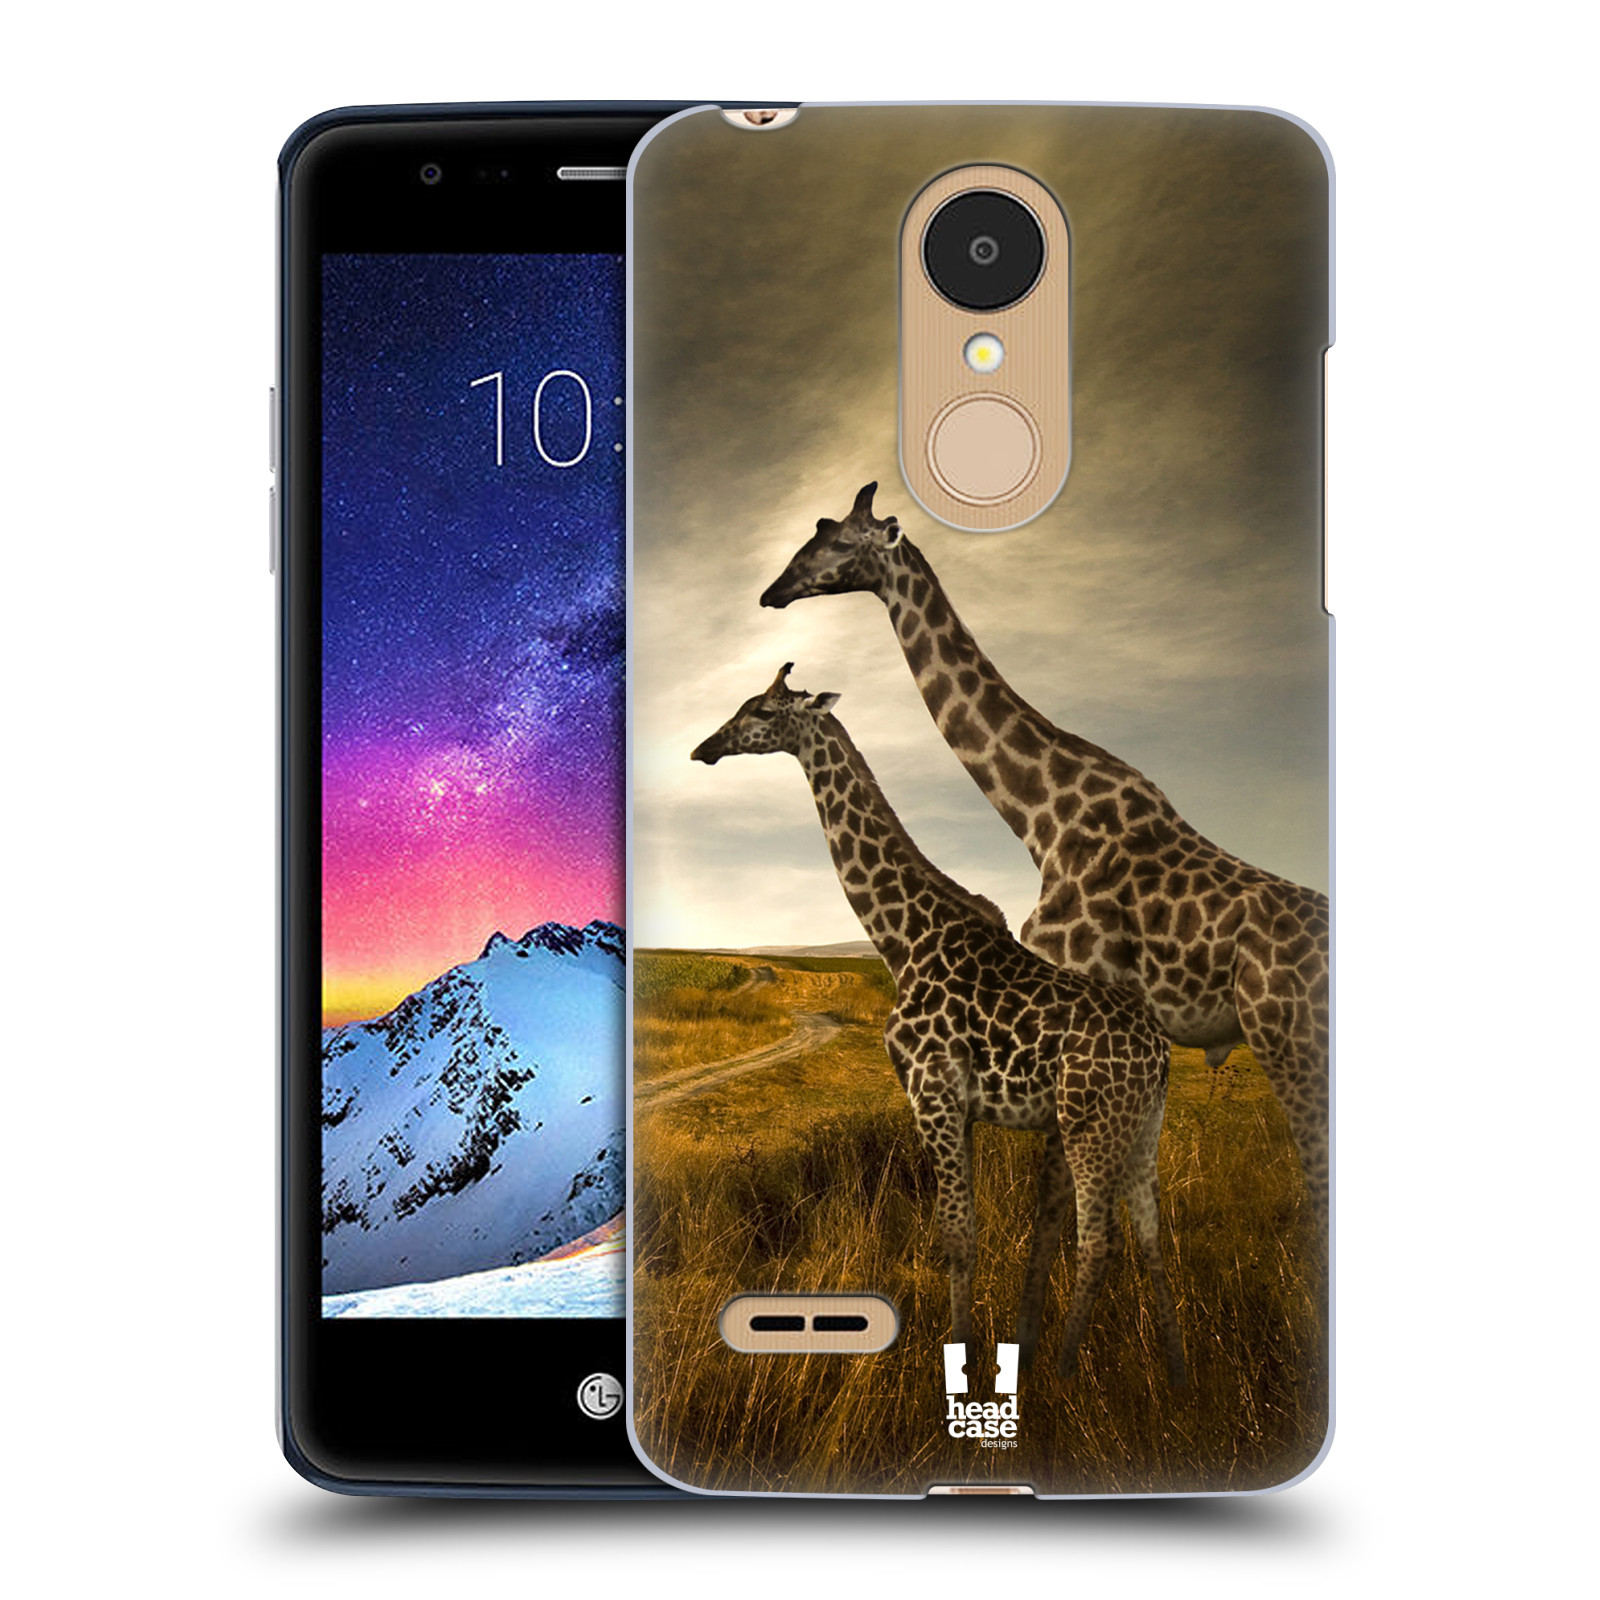 HEAD CASE plastový obal na mobil LG K9 / K8 2018 vzor Divočina, Divoký život a zvířata foto AFRIKA ŽIRAFY VÝHLED